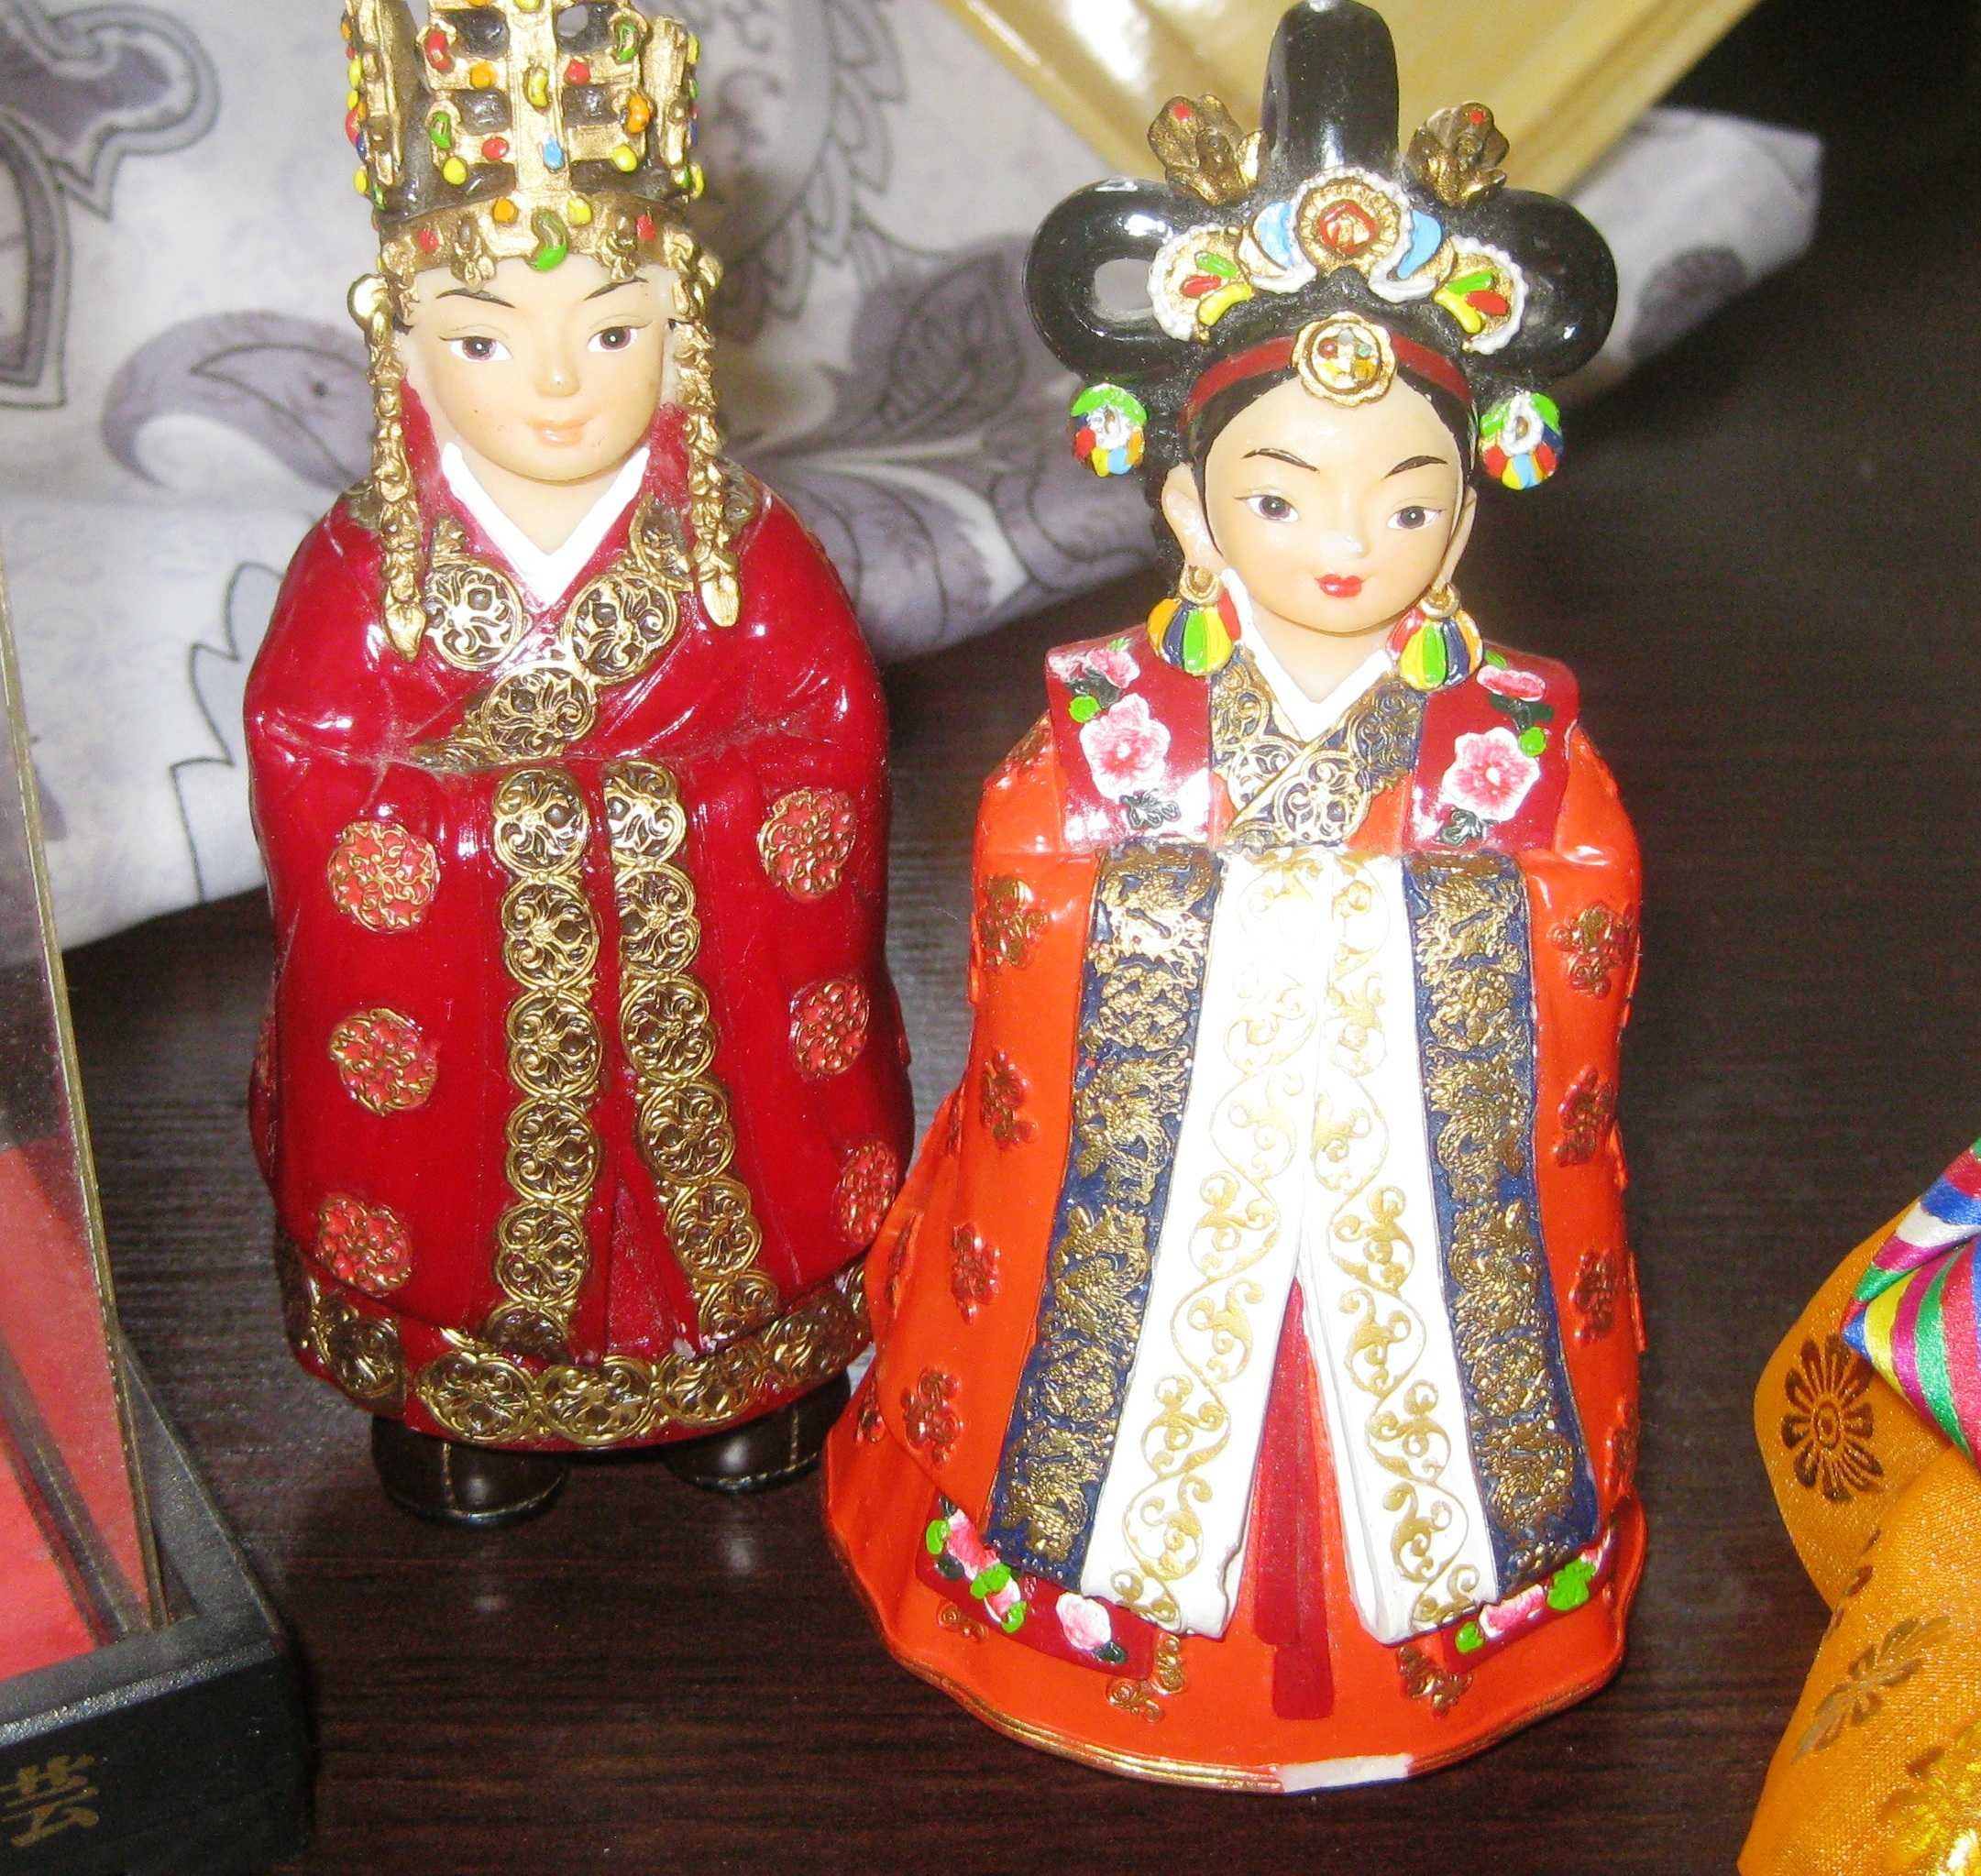 Сувениры из Кореи, одна 8,000т, фарфоровая парочка - 5,000 тенге